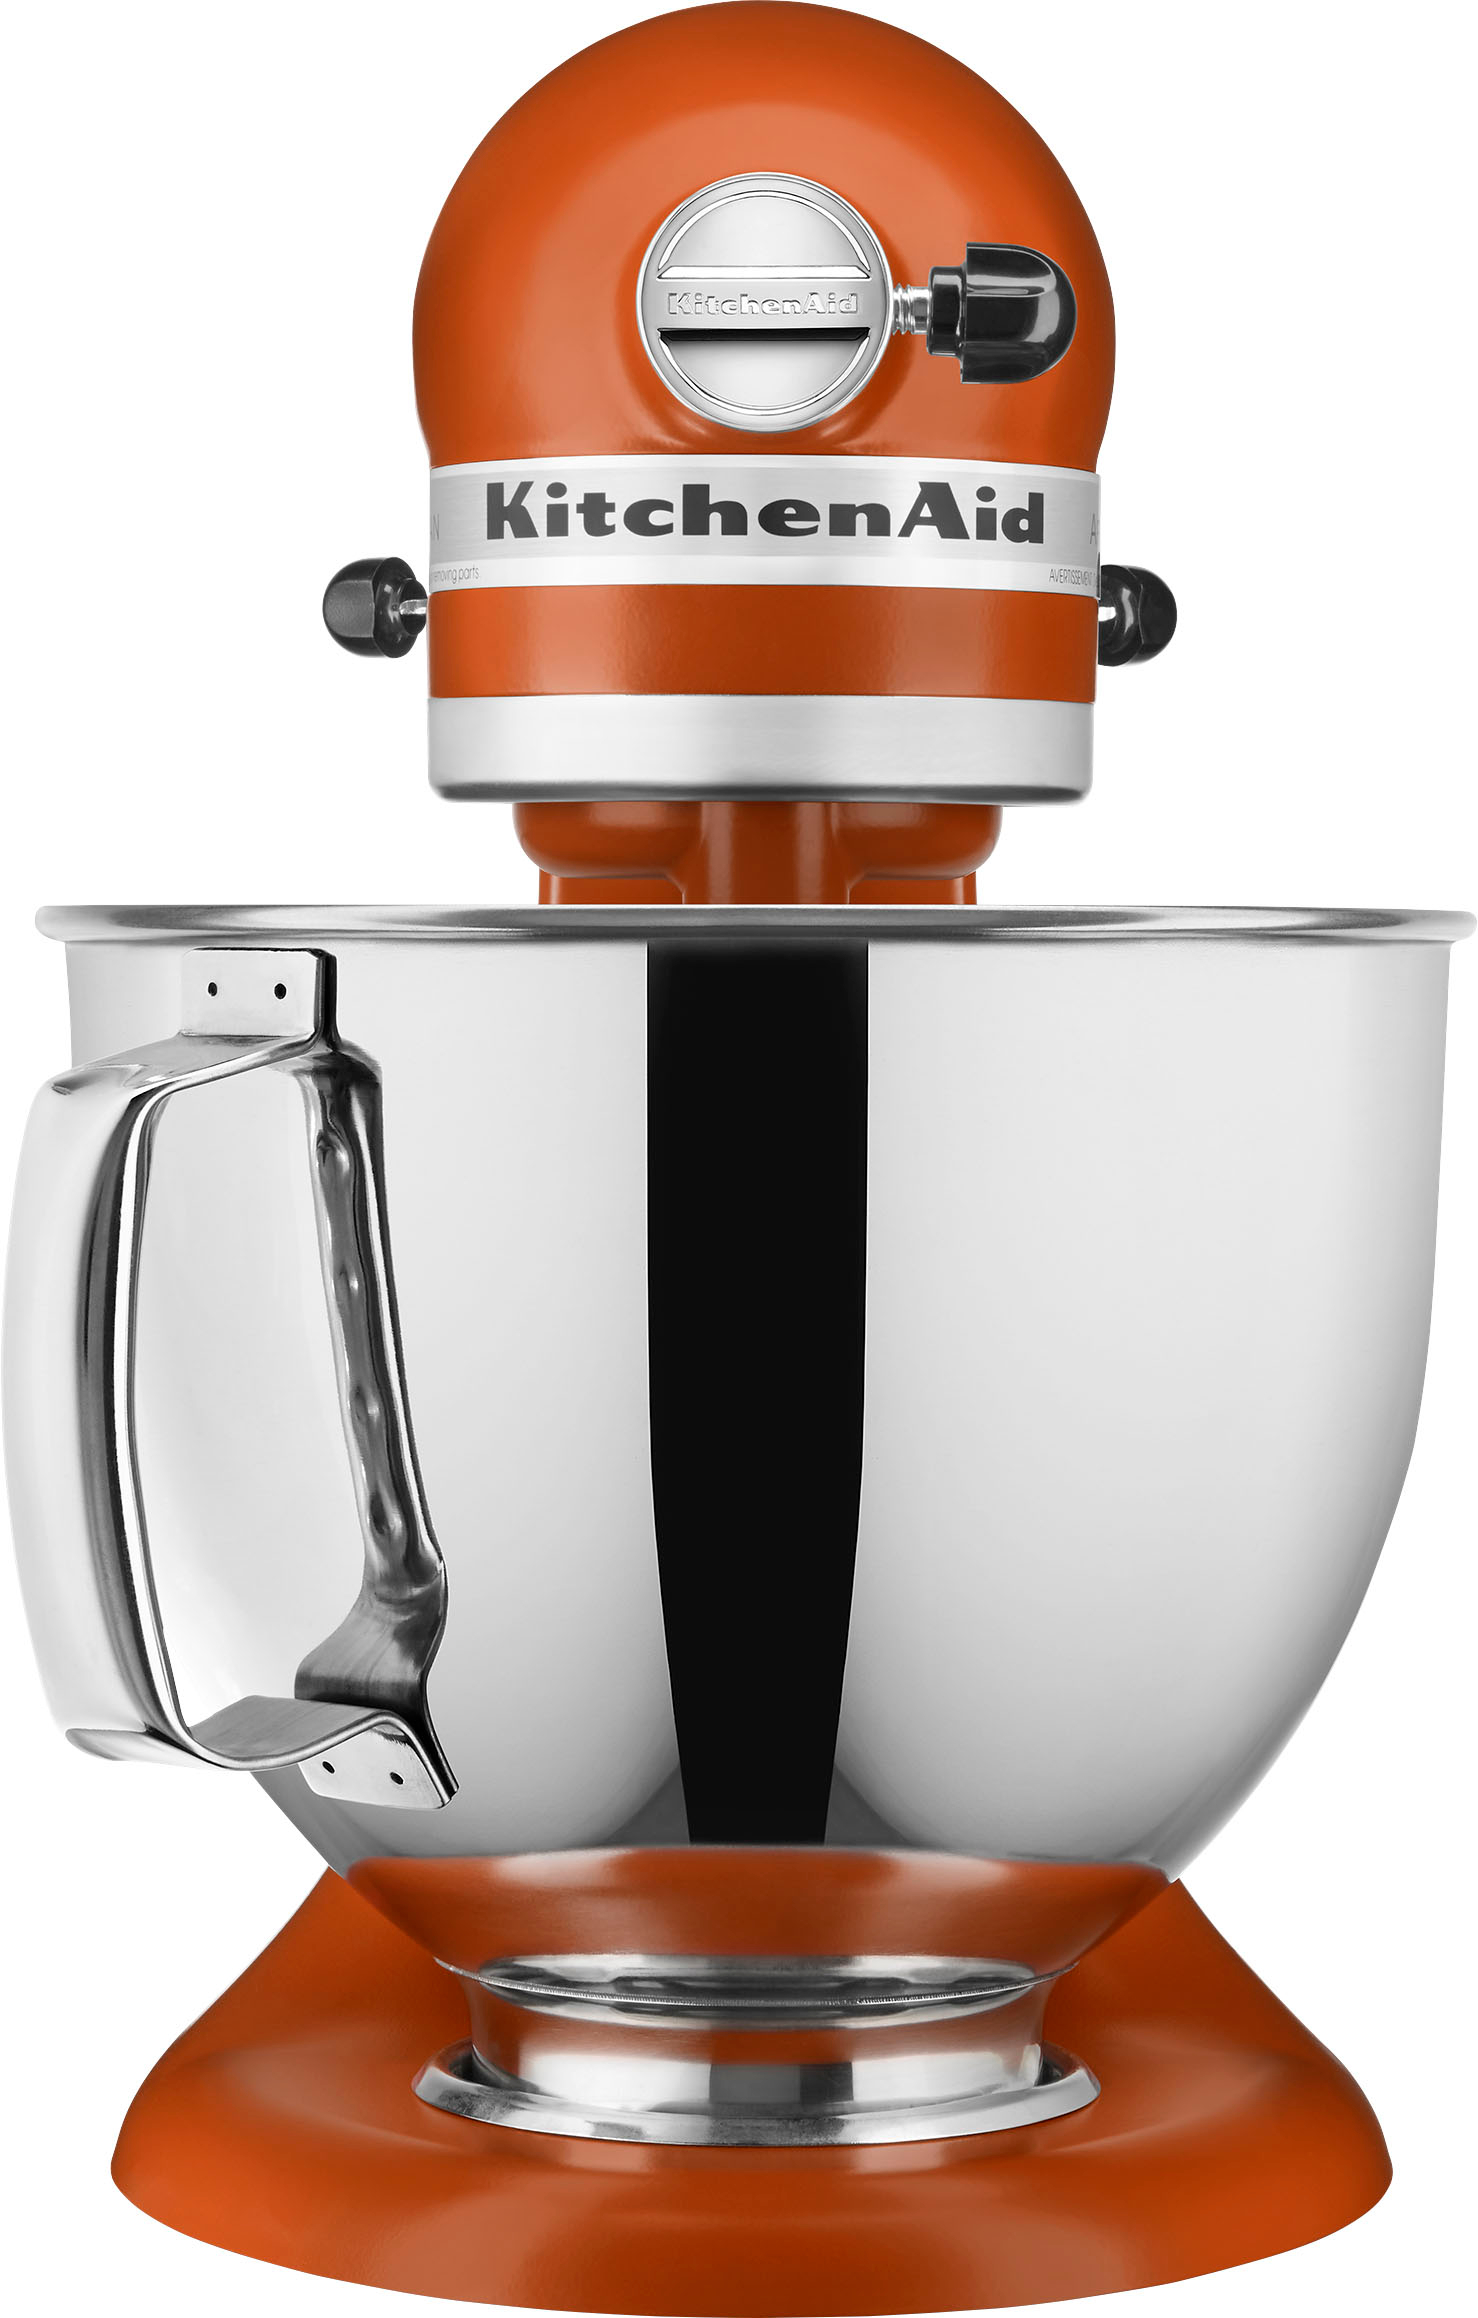 Left View: KitchenAid - Artisan Series 5 Quart Tilt-Head Stand Mixer - KSM150PSSC - Scorched Orange